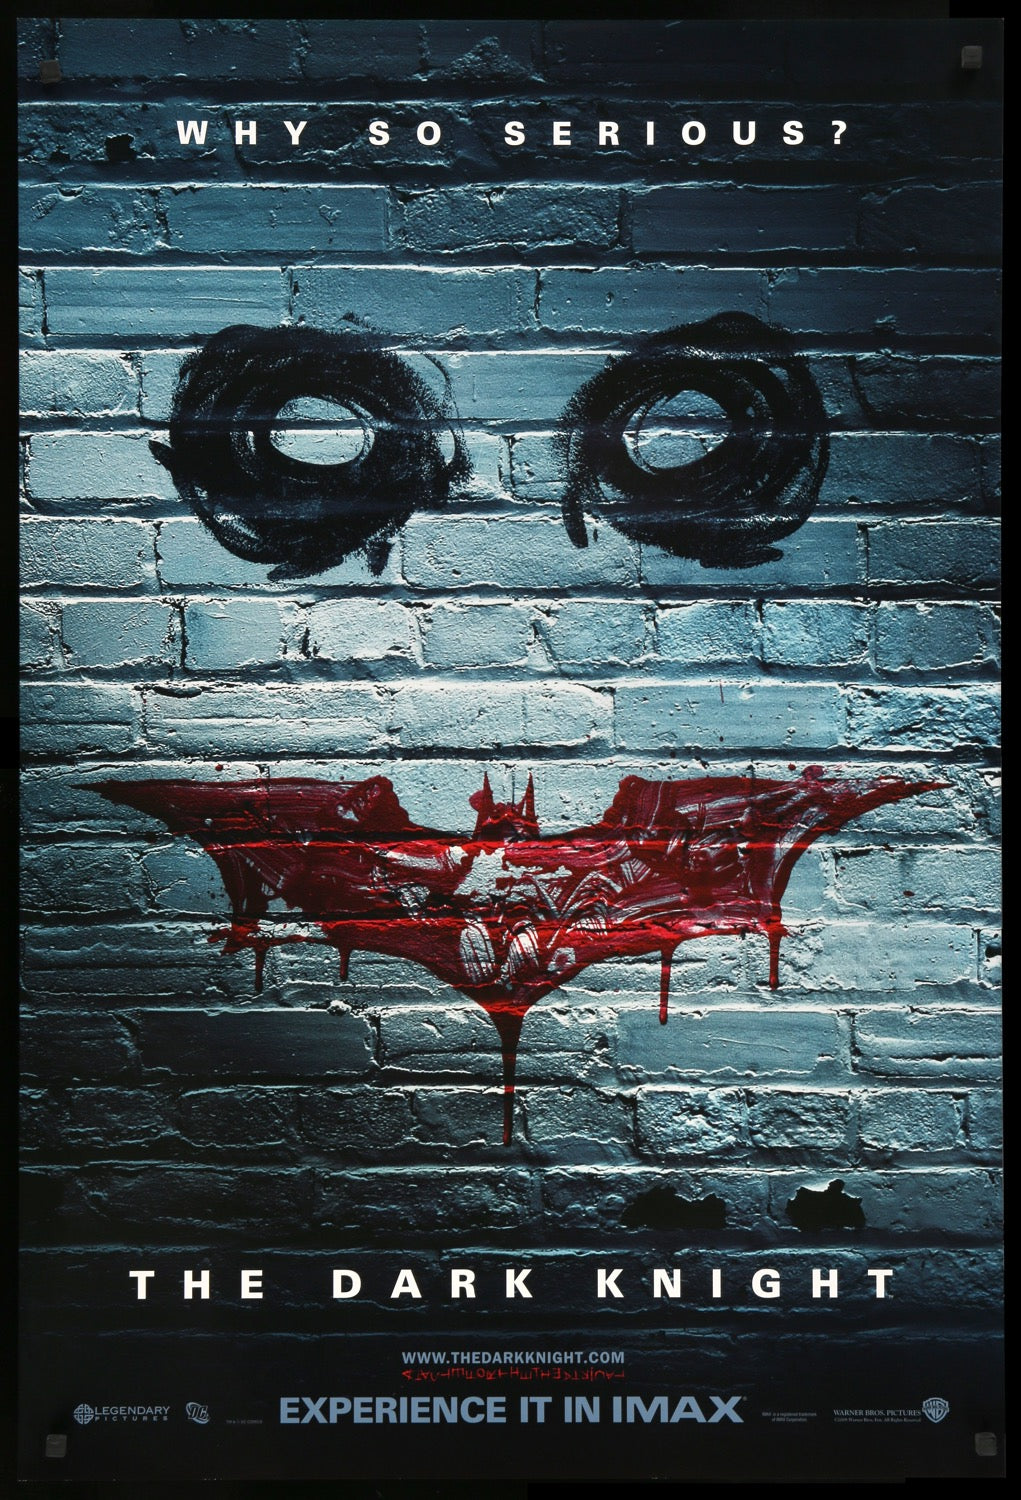 Dark Knight (2008) original movie poster for sale at Original Film Art